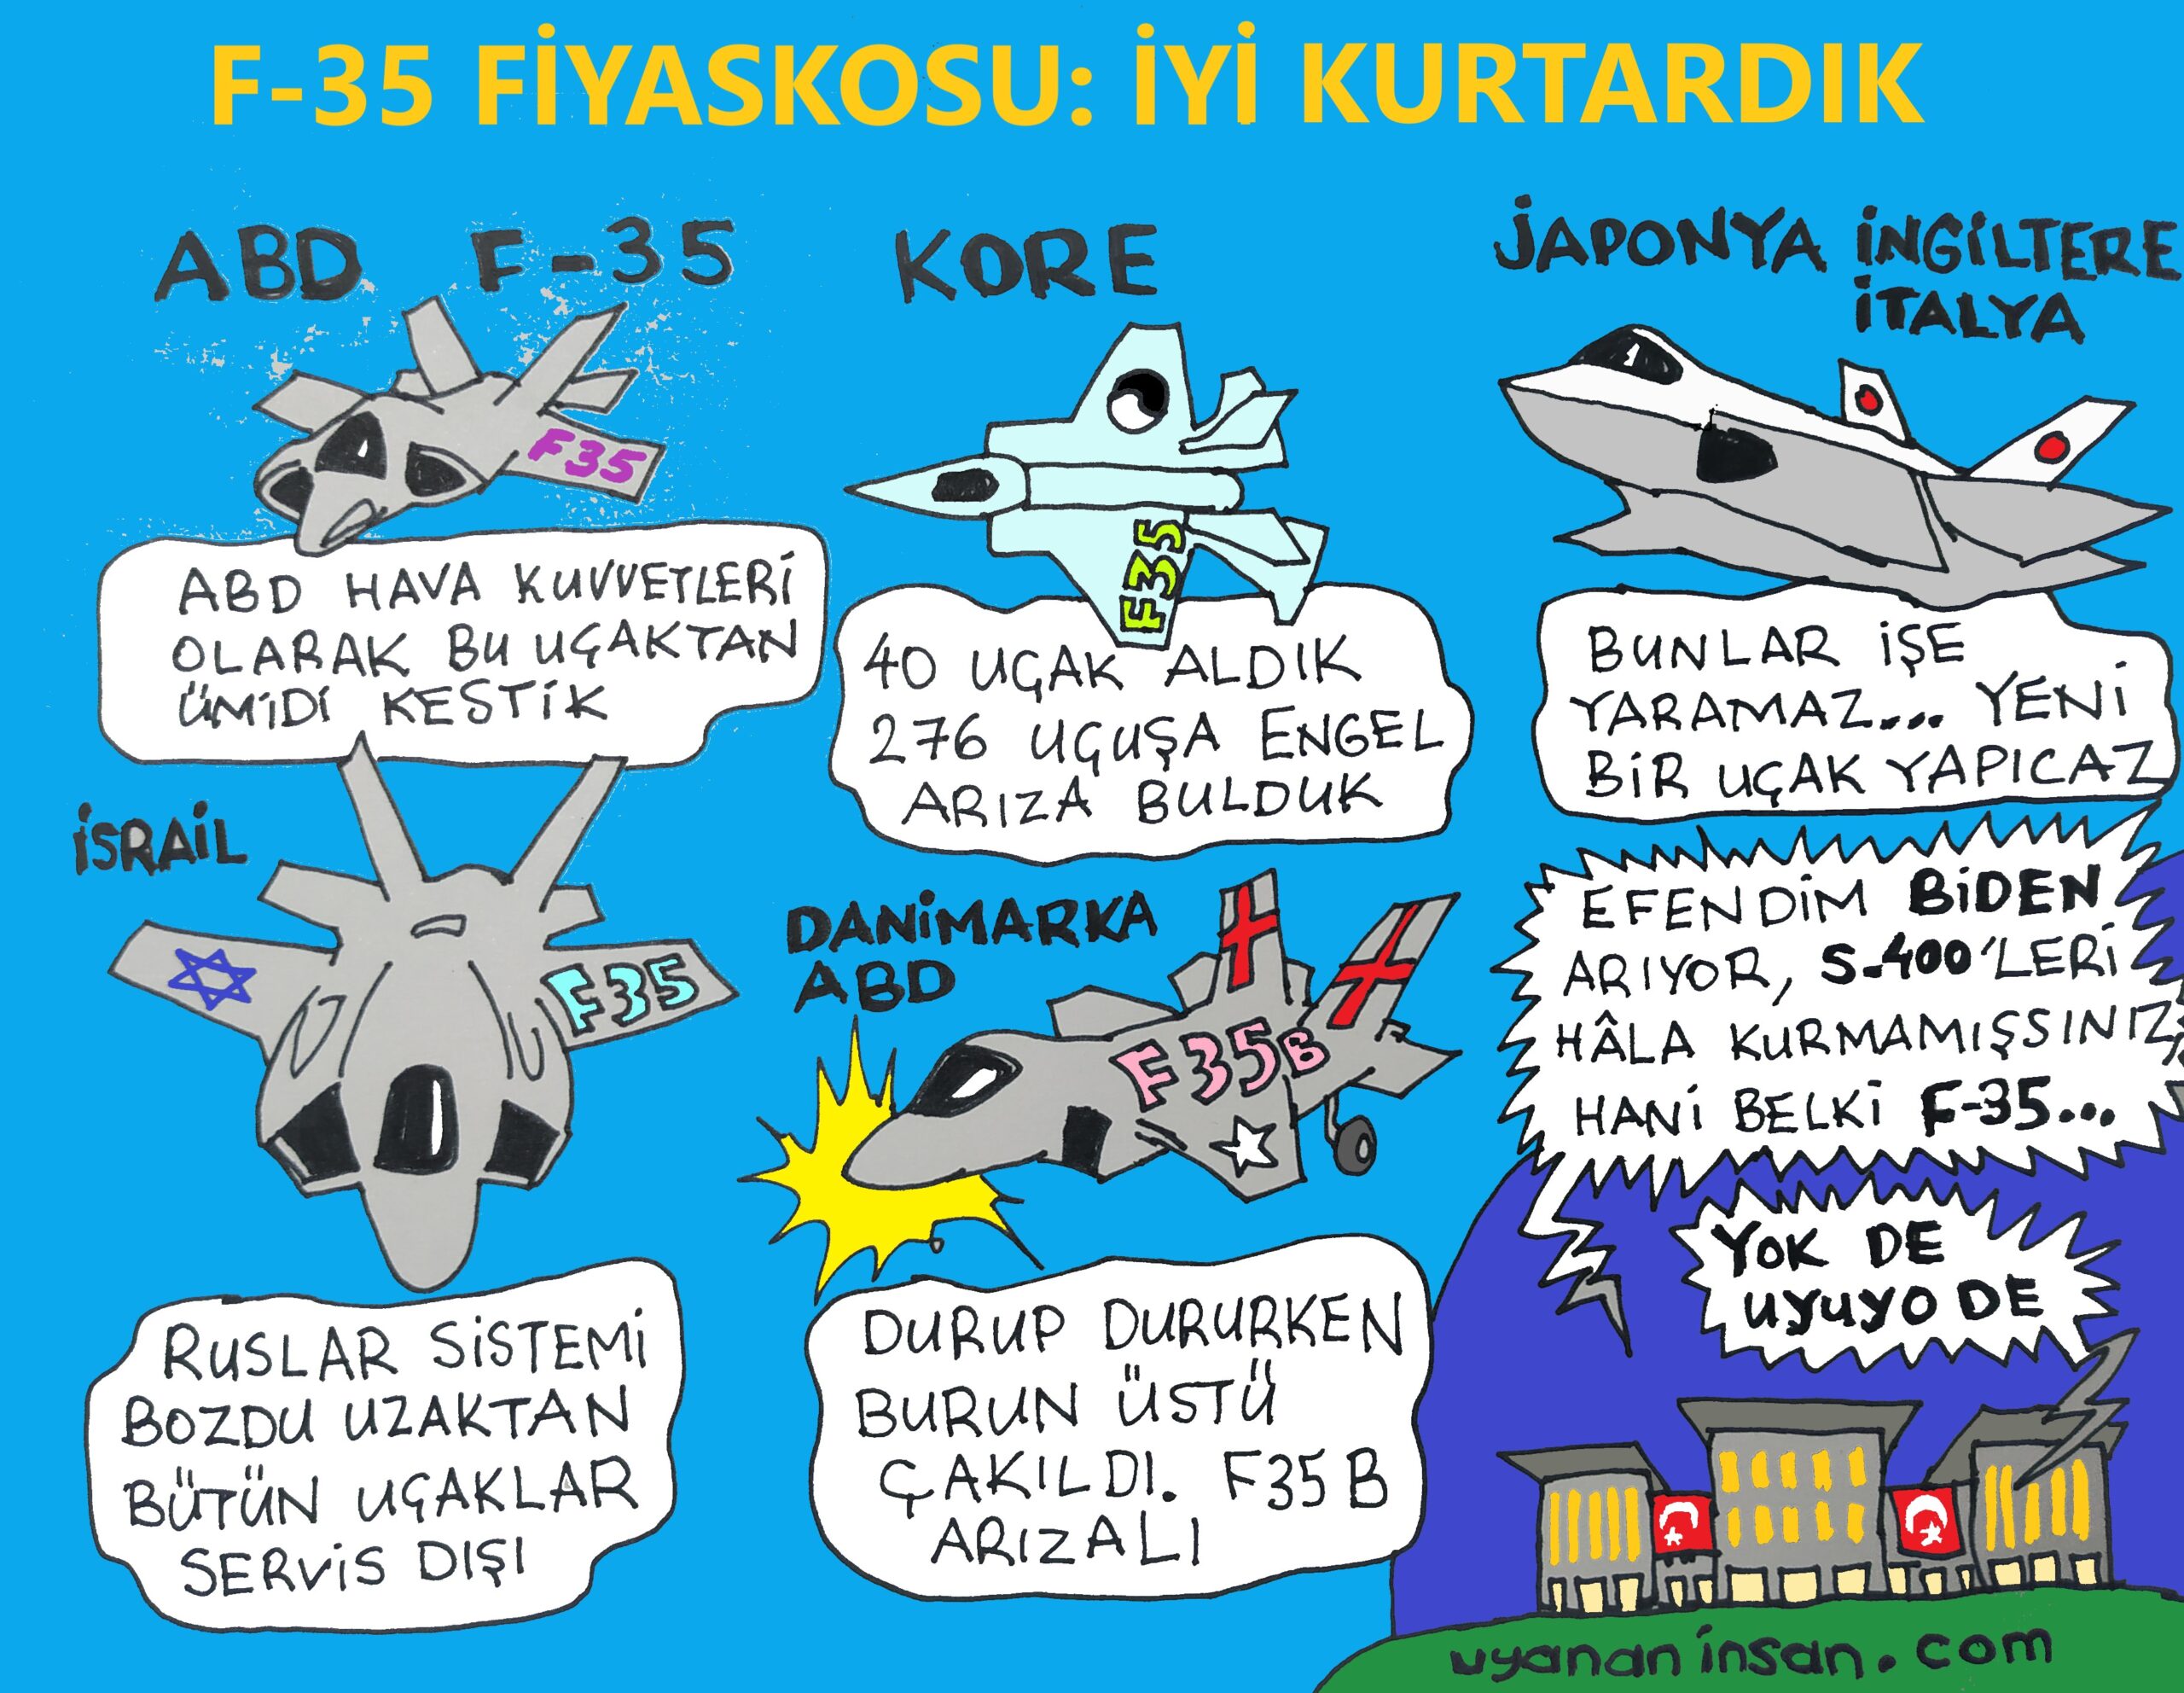 F-35 FİYASKOSU